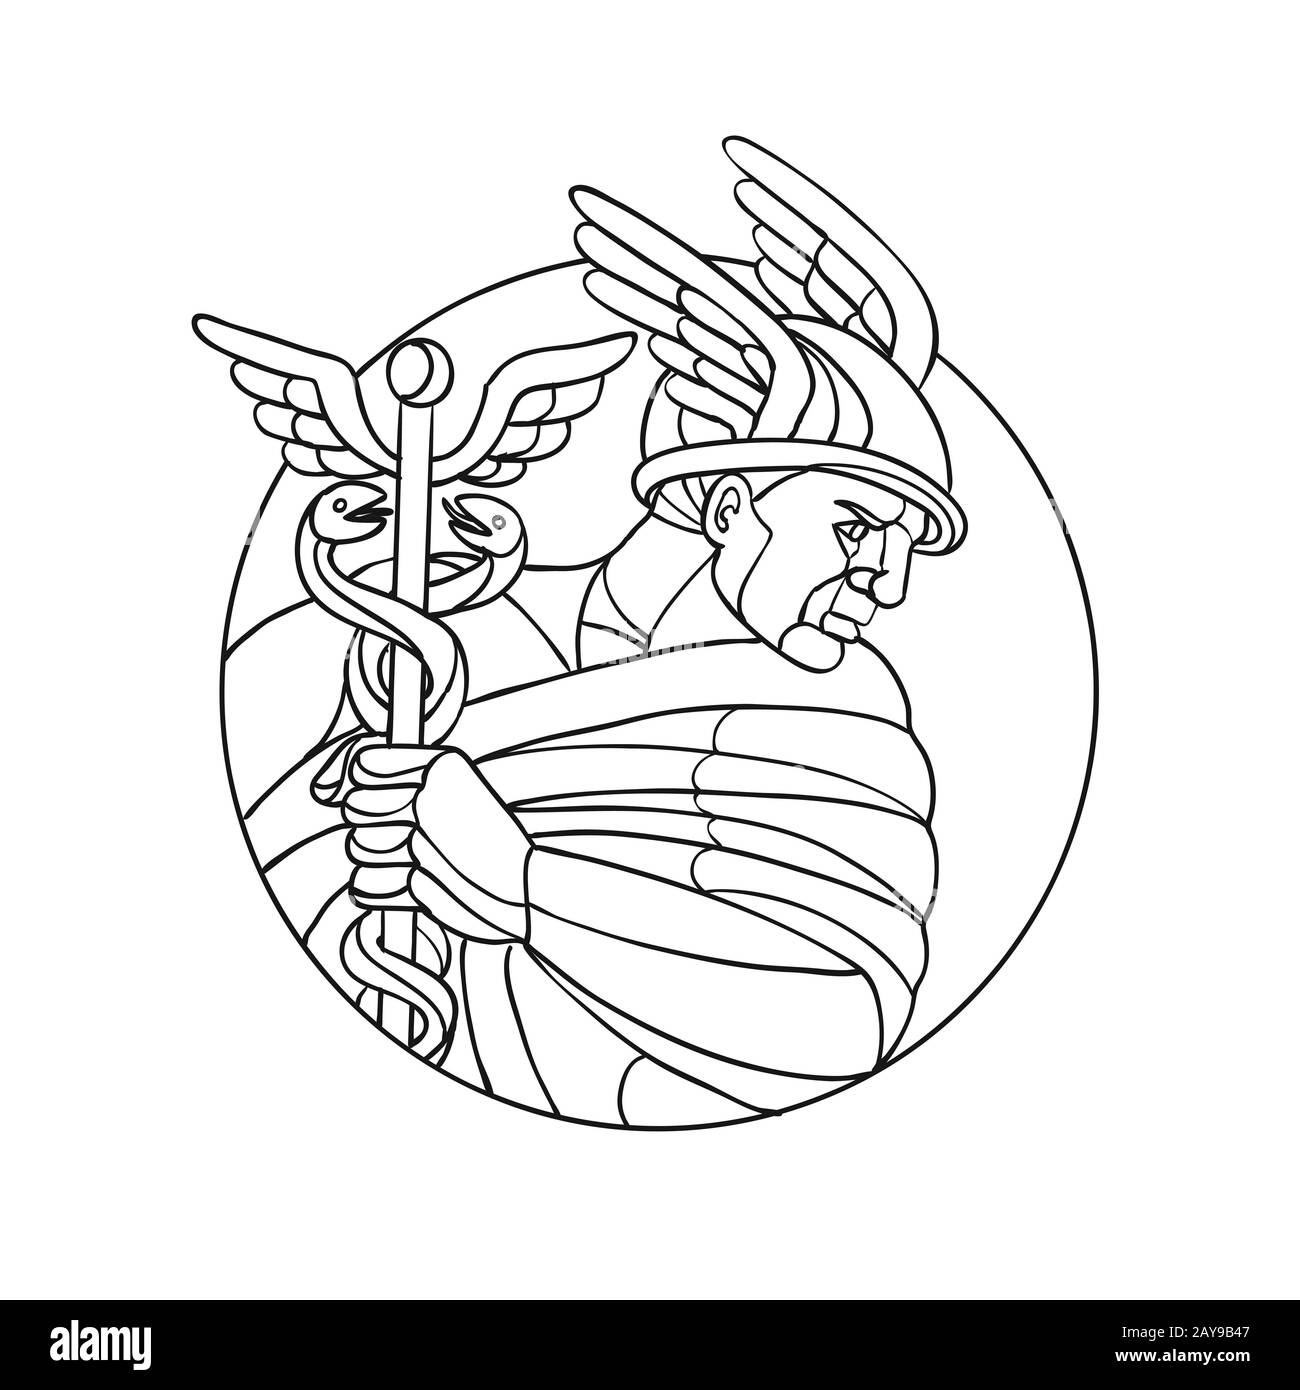 Hermes Paris Logo Editorial Illustrative on White Background Editorial  Image - Illustration of icons, logo: 210442755